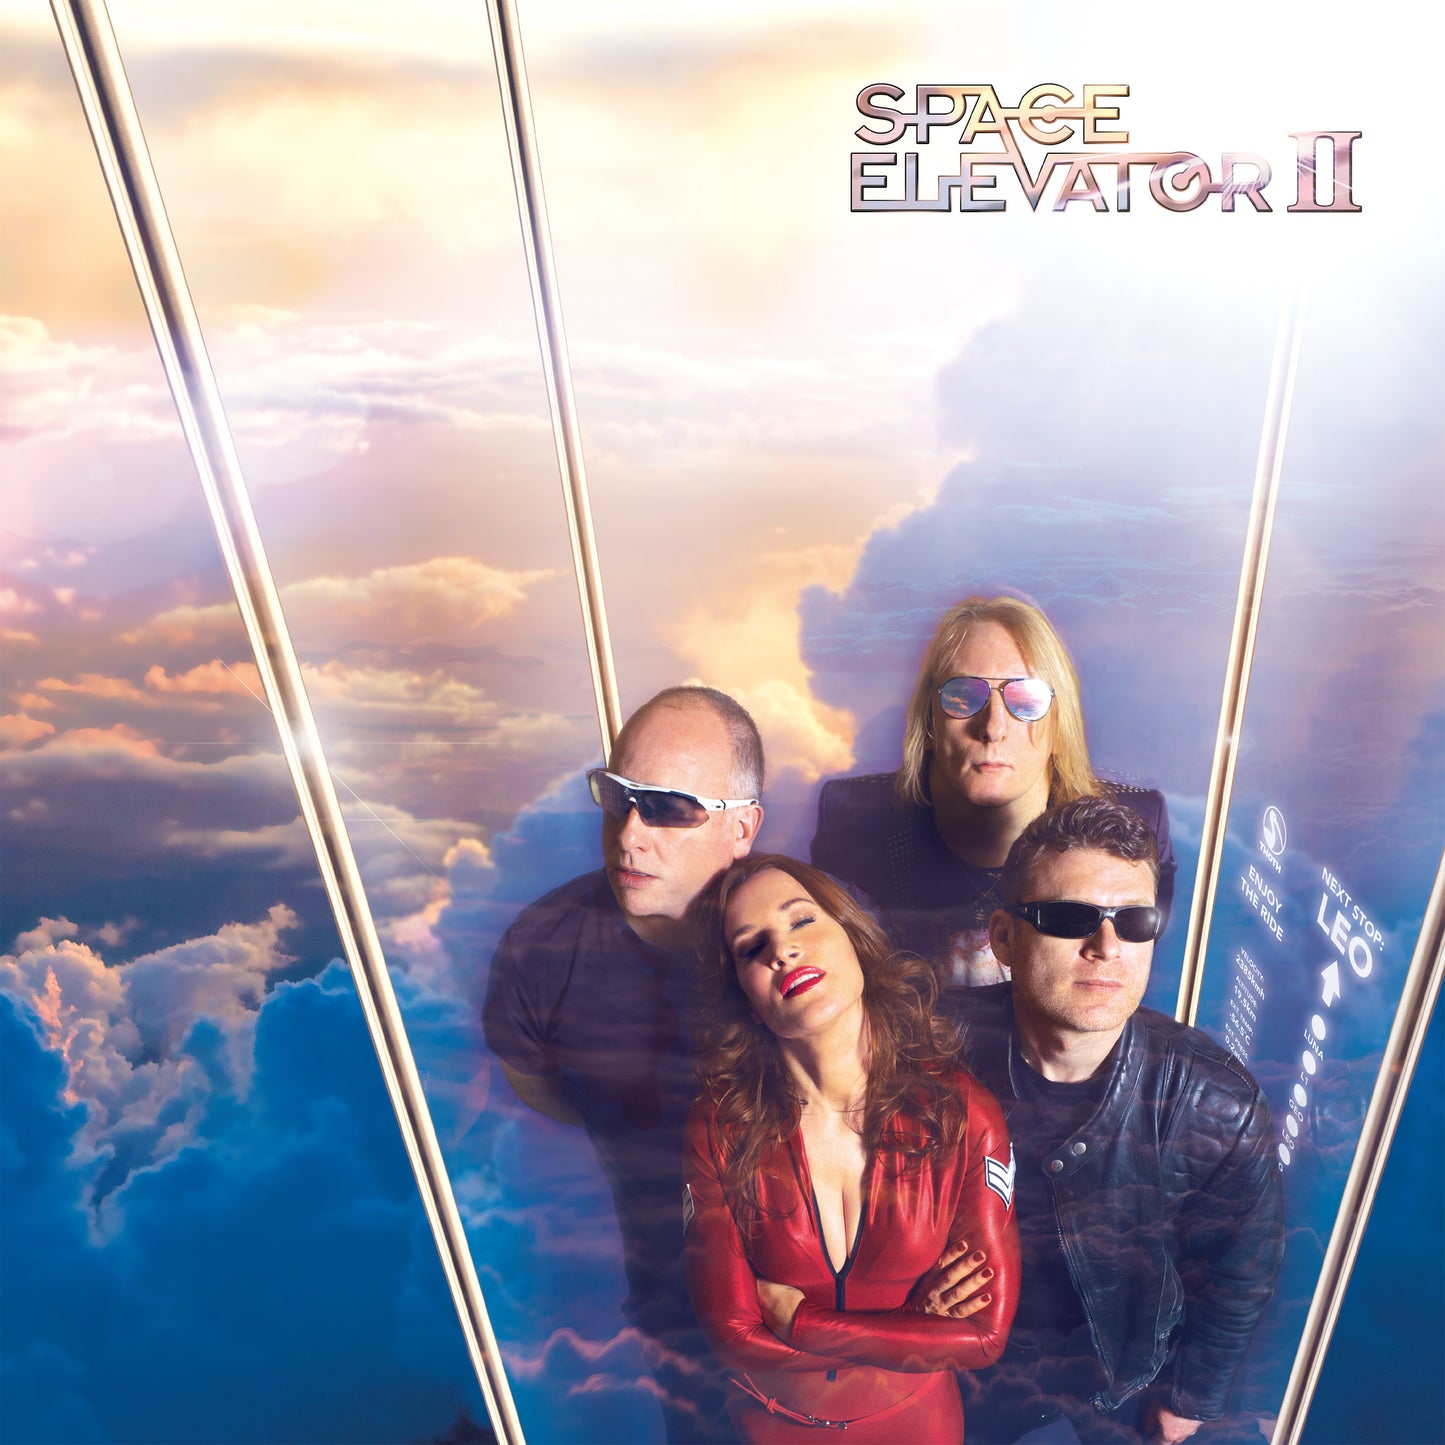 Space Elevator "II" CD